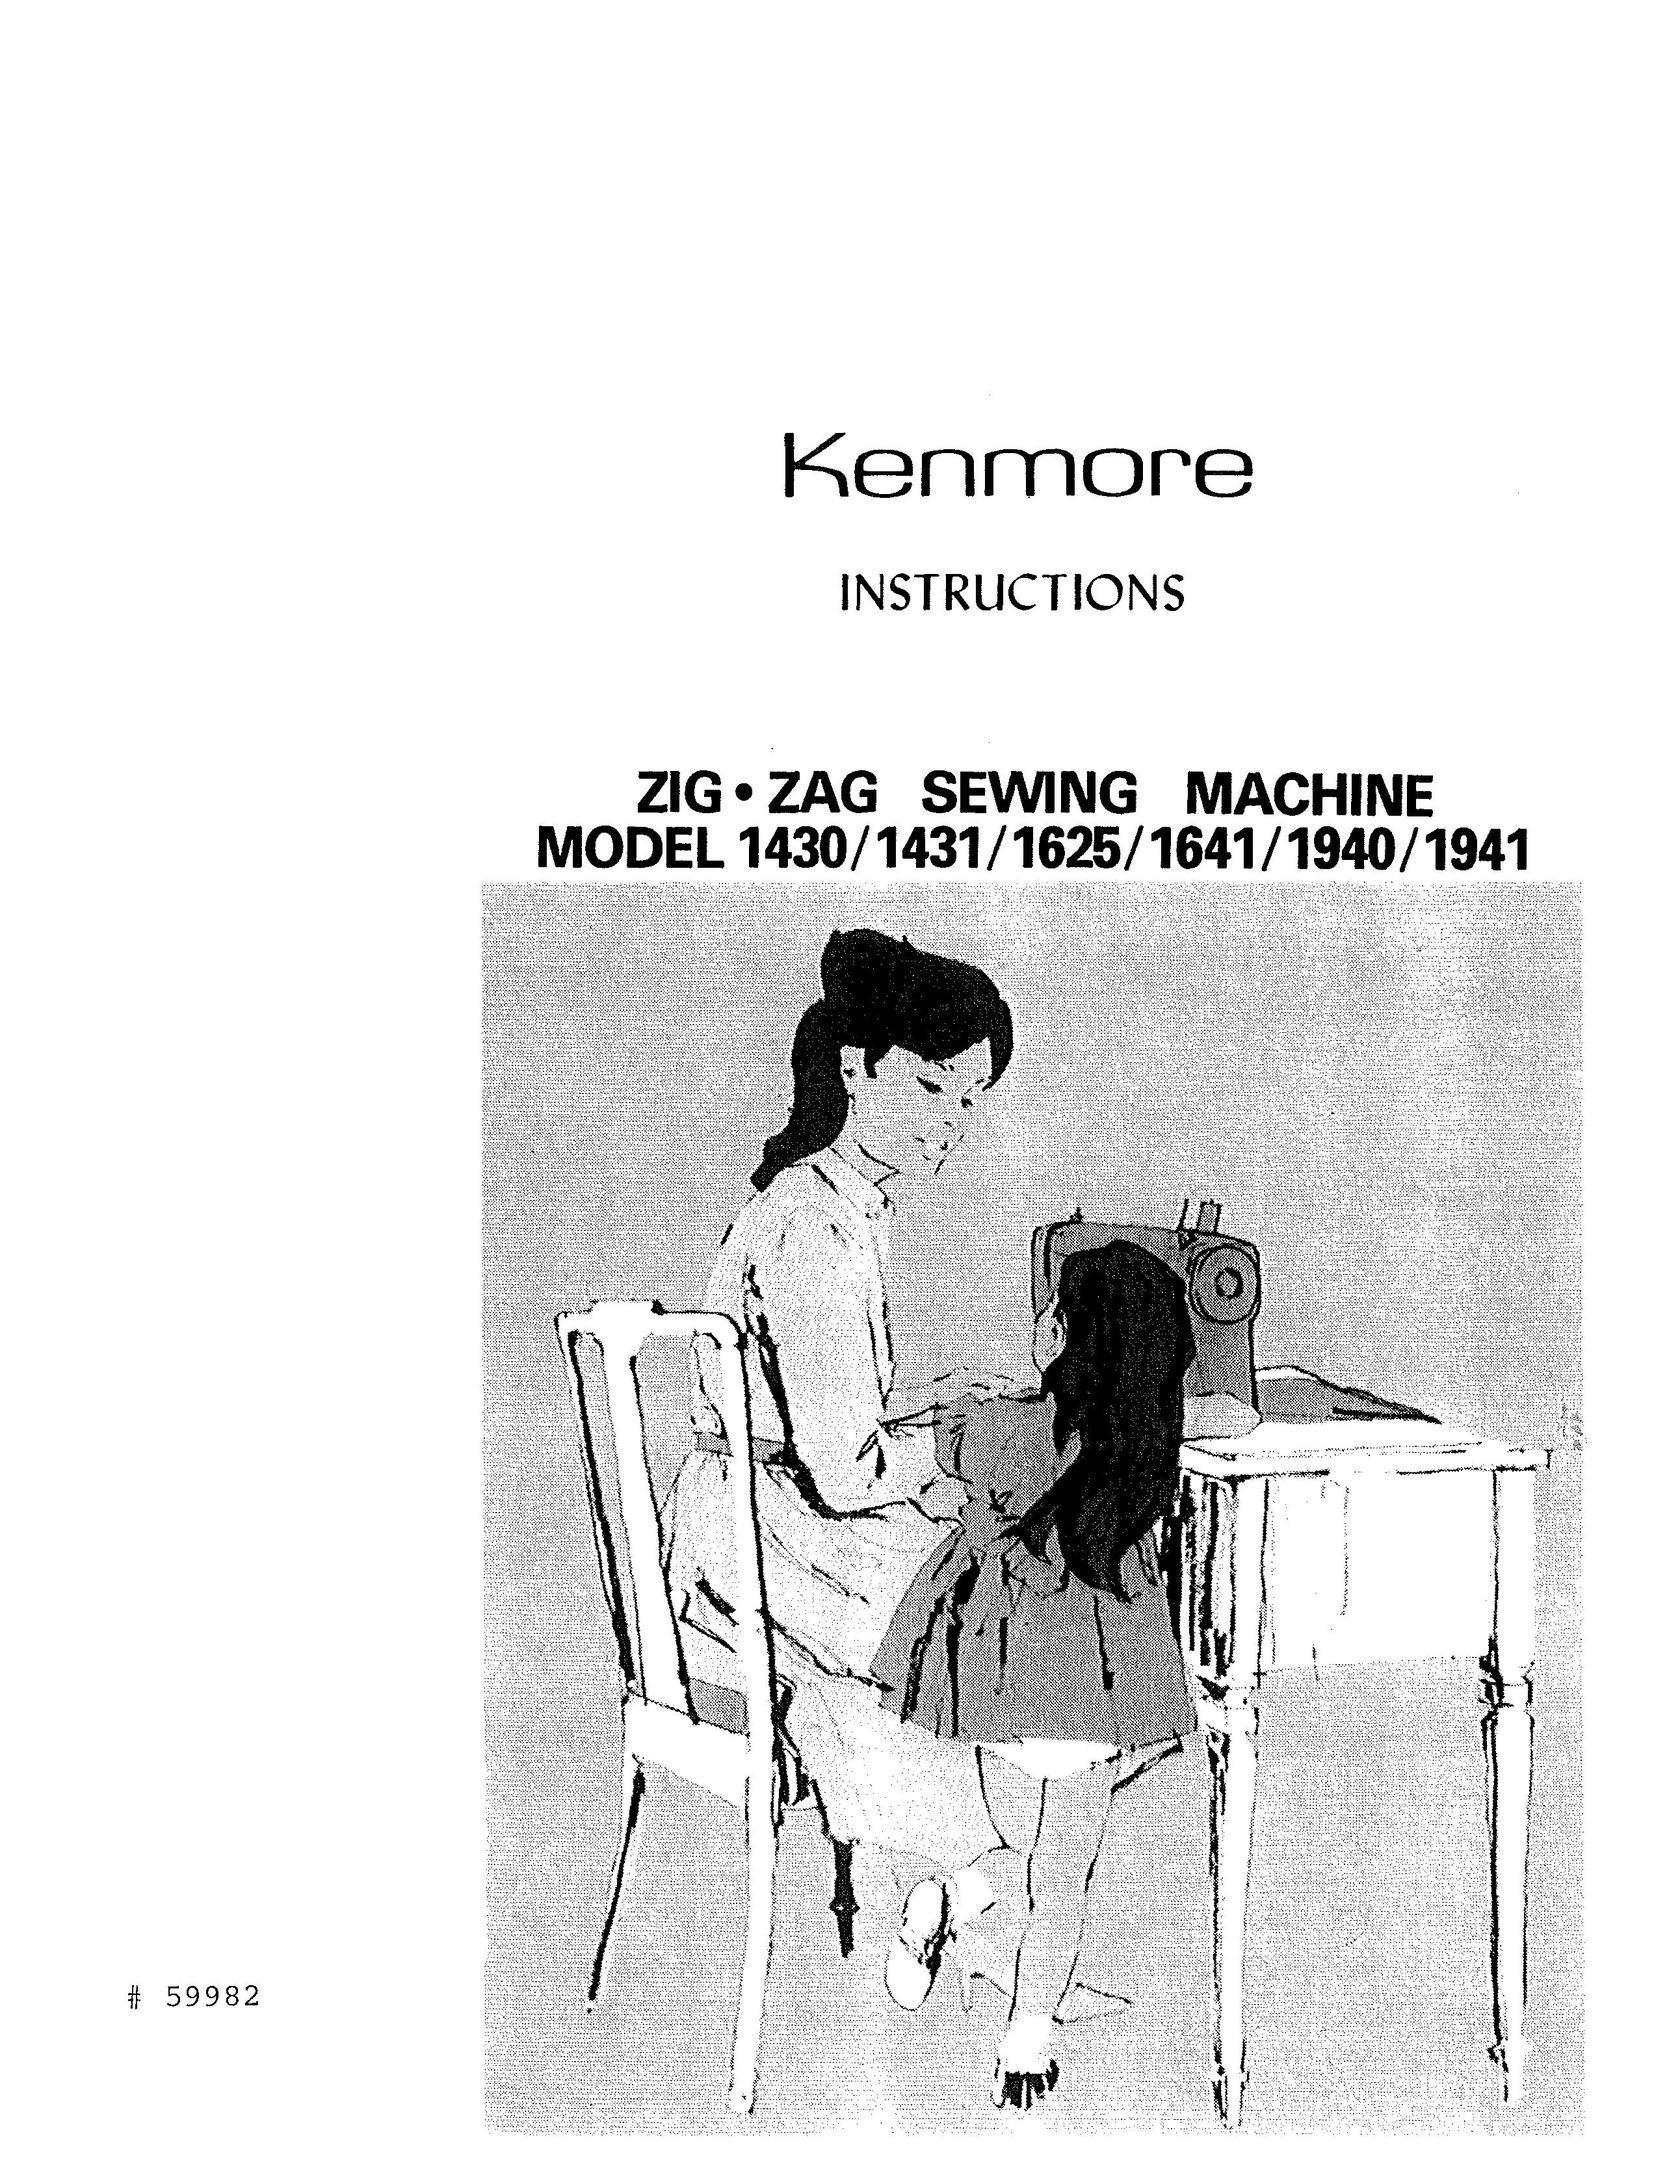 Kenmore 1940 Sewing Machine User Manual